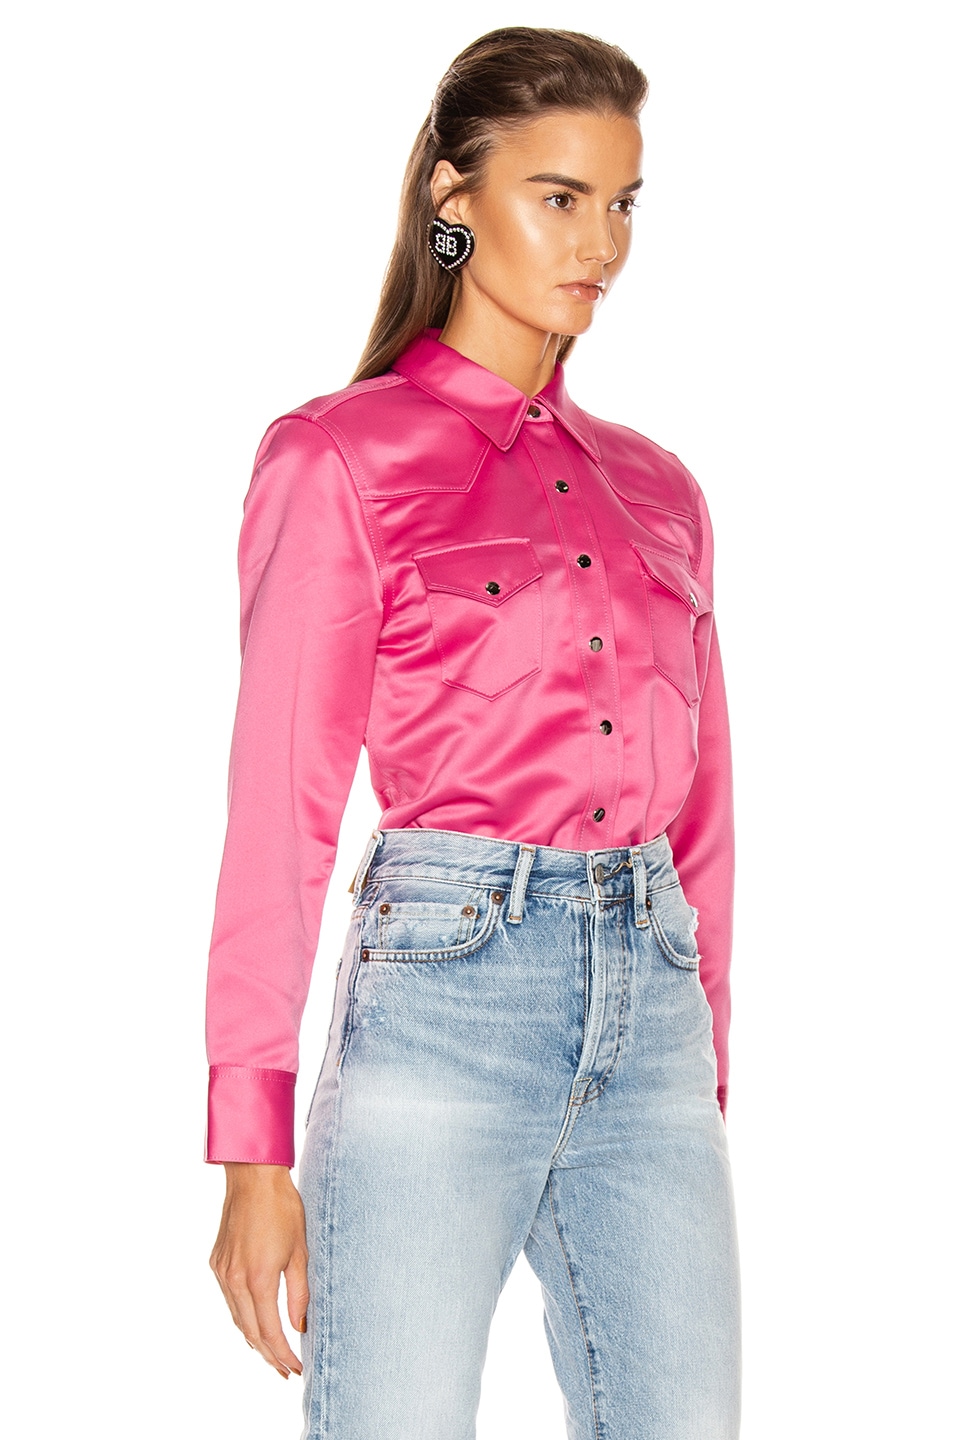 Acne Studios Bla Konst 2002 Satin Shirt in Bright Pink | FWRD